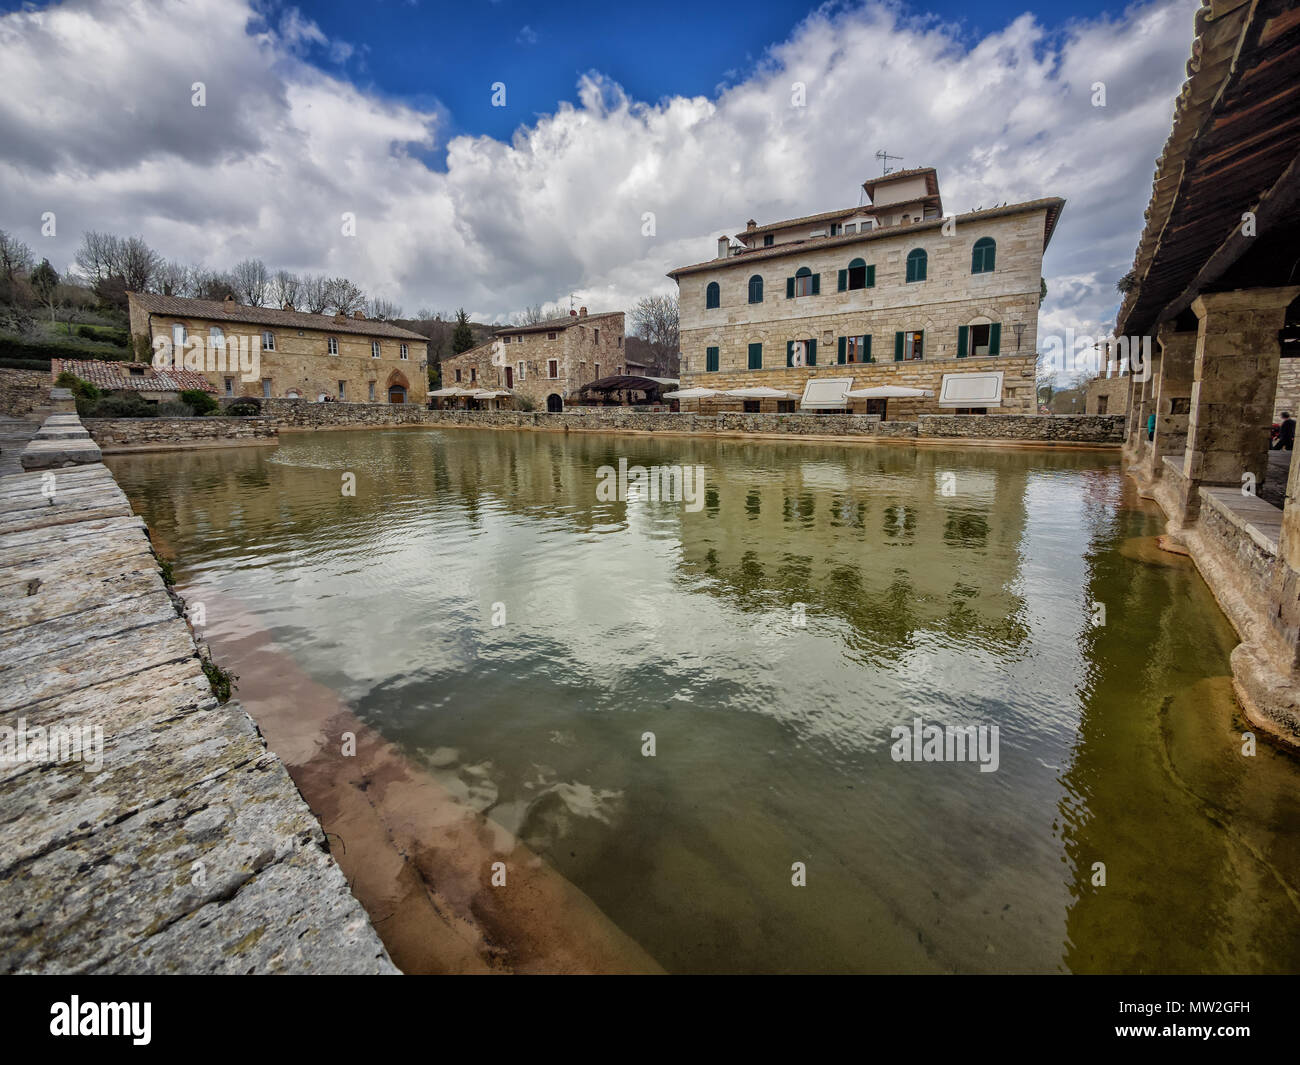 Thermal bath in the center of Bagno Vignoni, Tuscany Italy Stock Photo